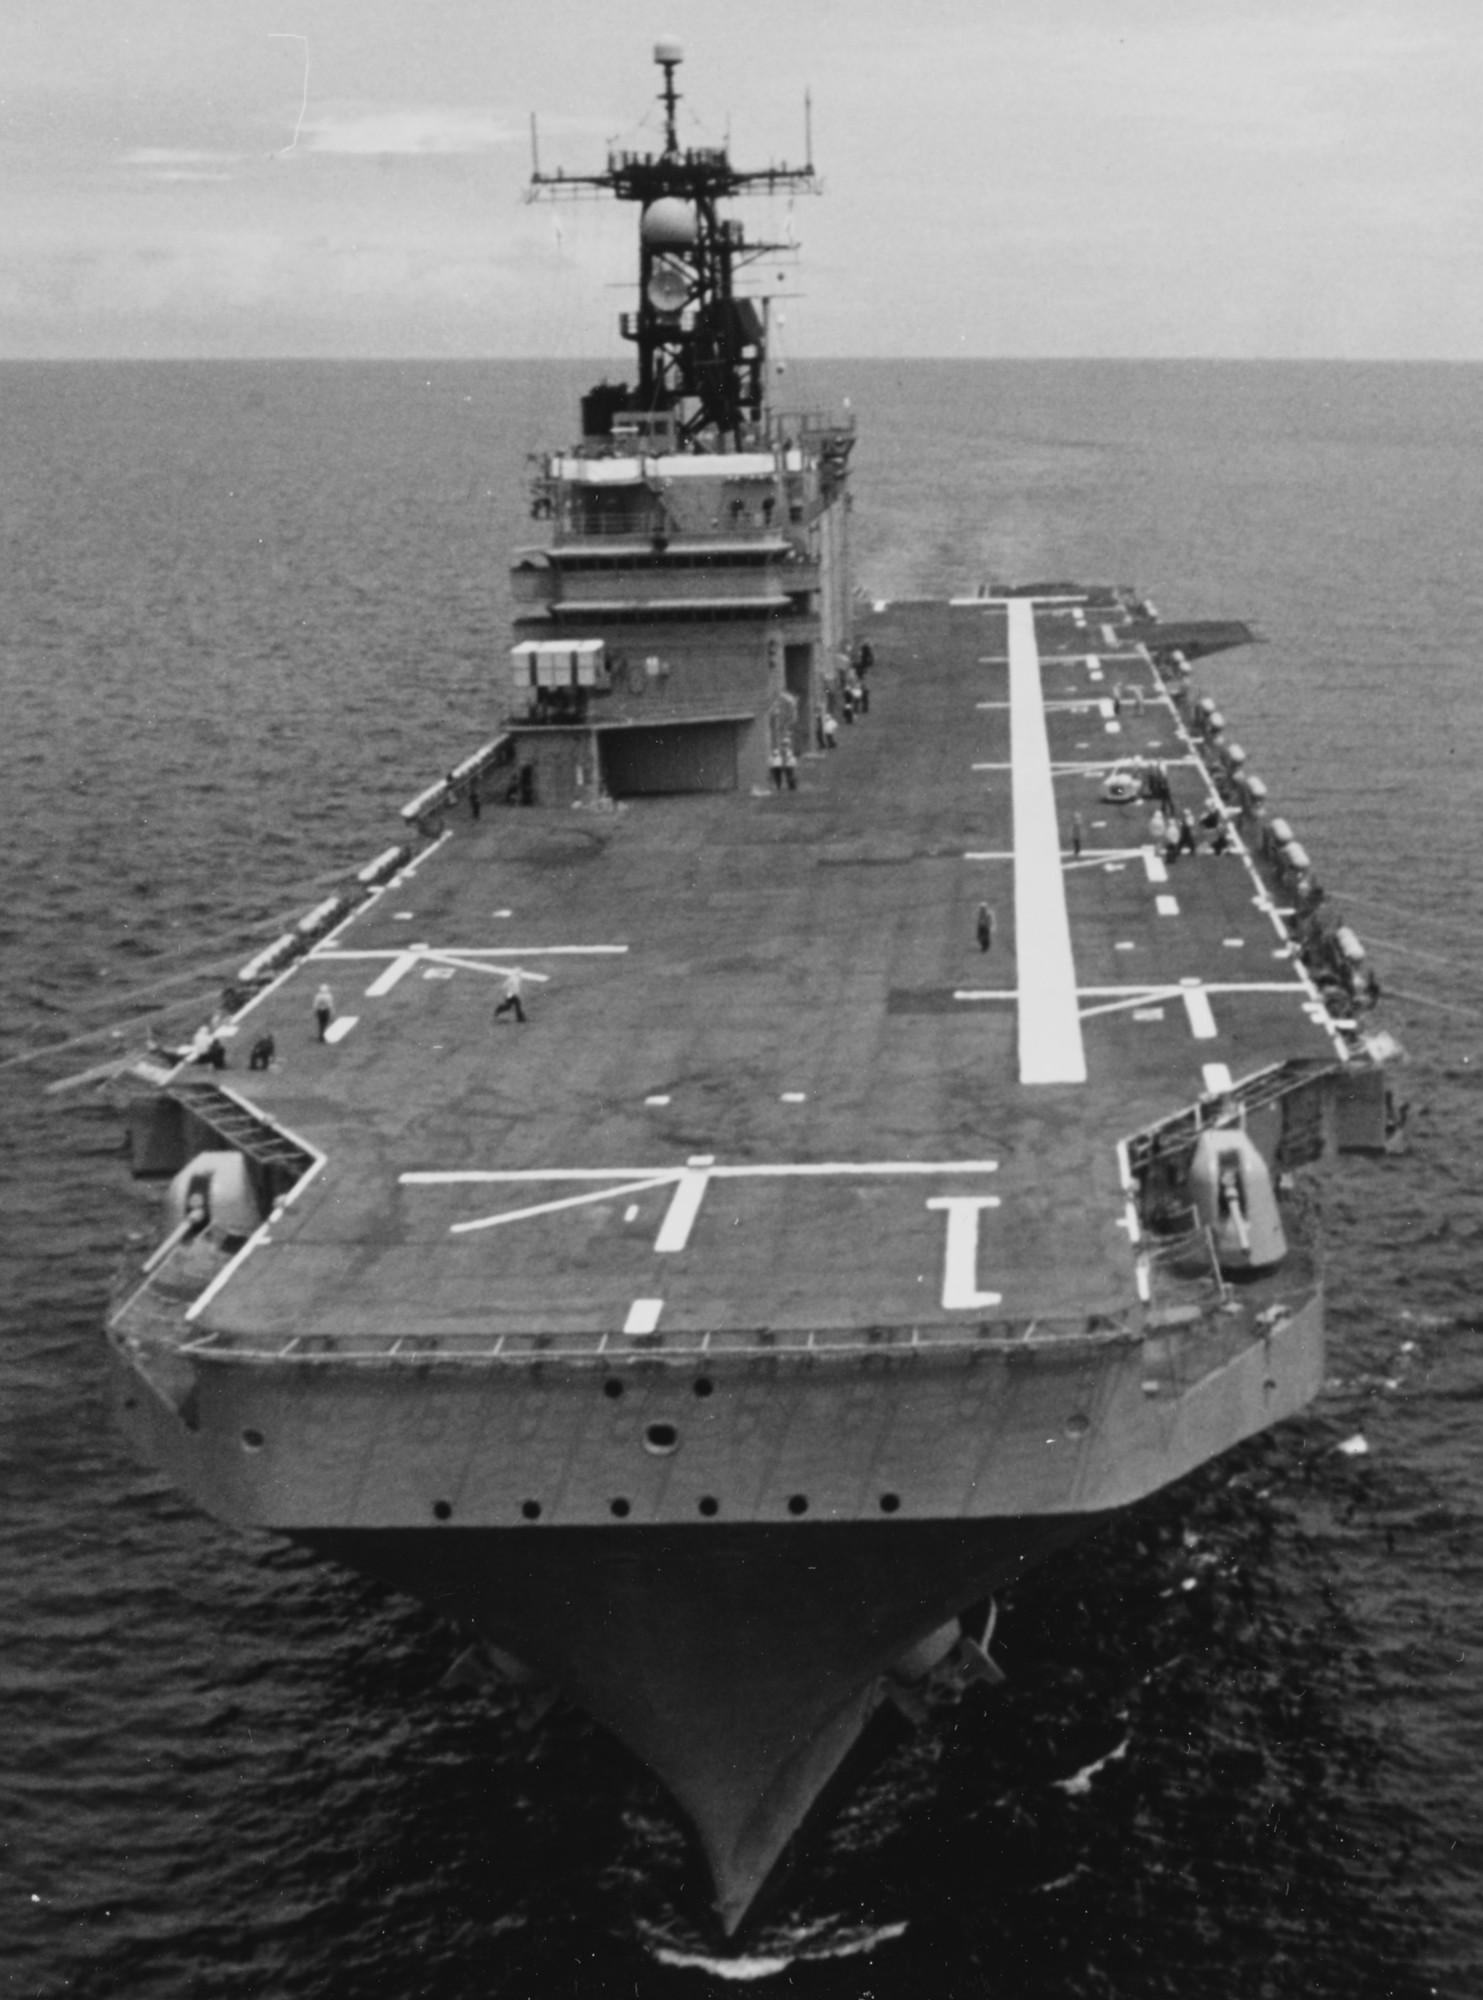 lha-1 uss tarawa amphibious assault ship us navy trials 56